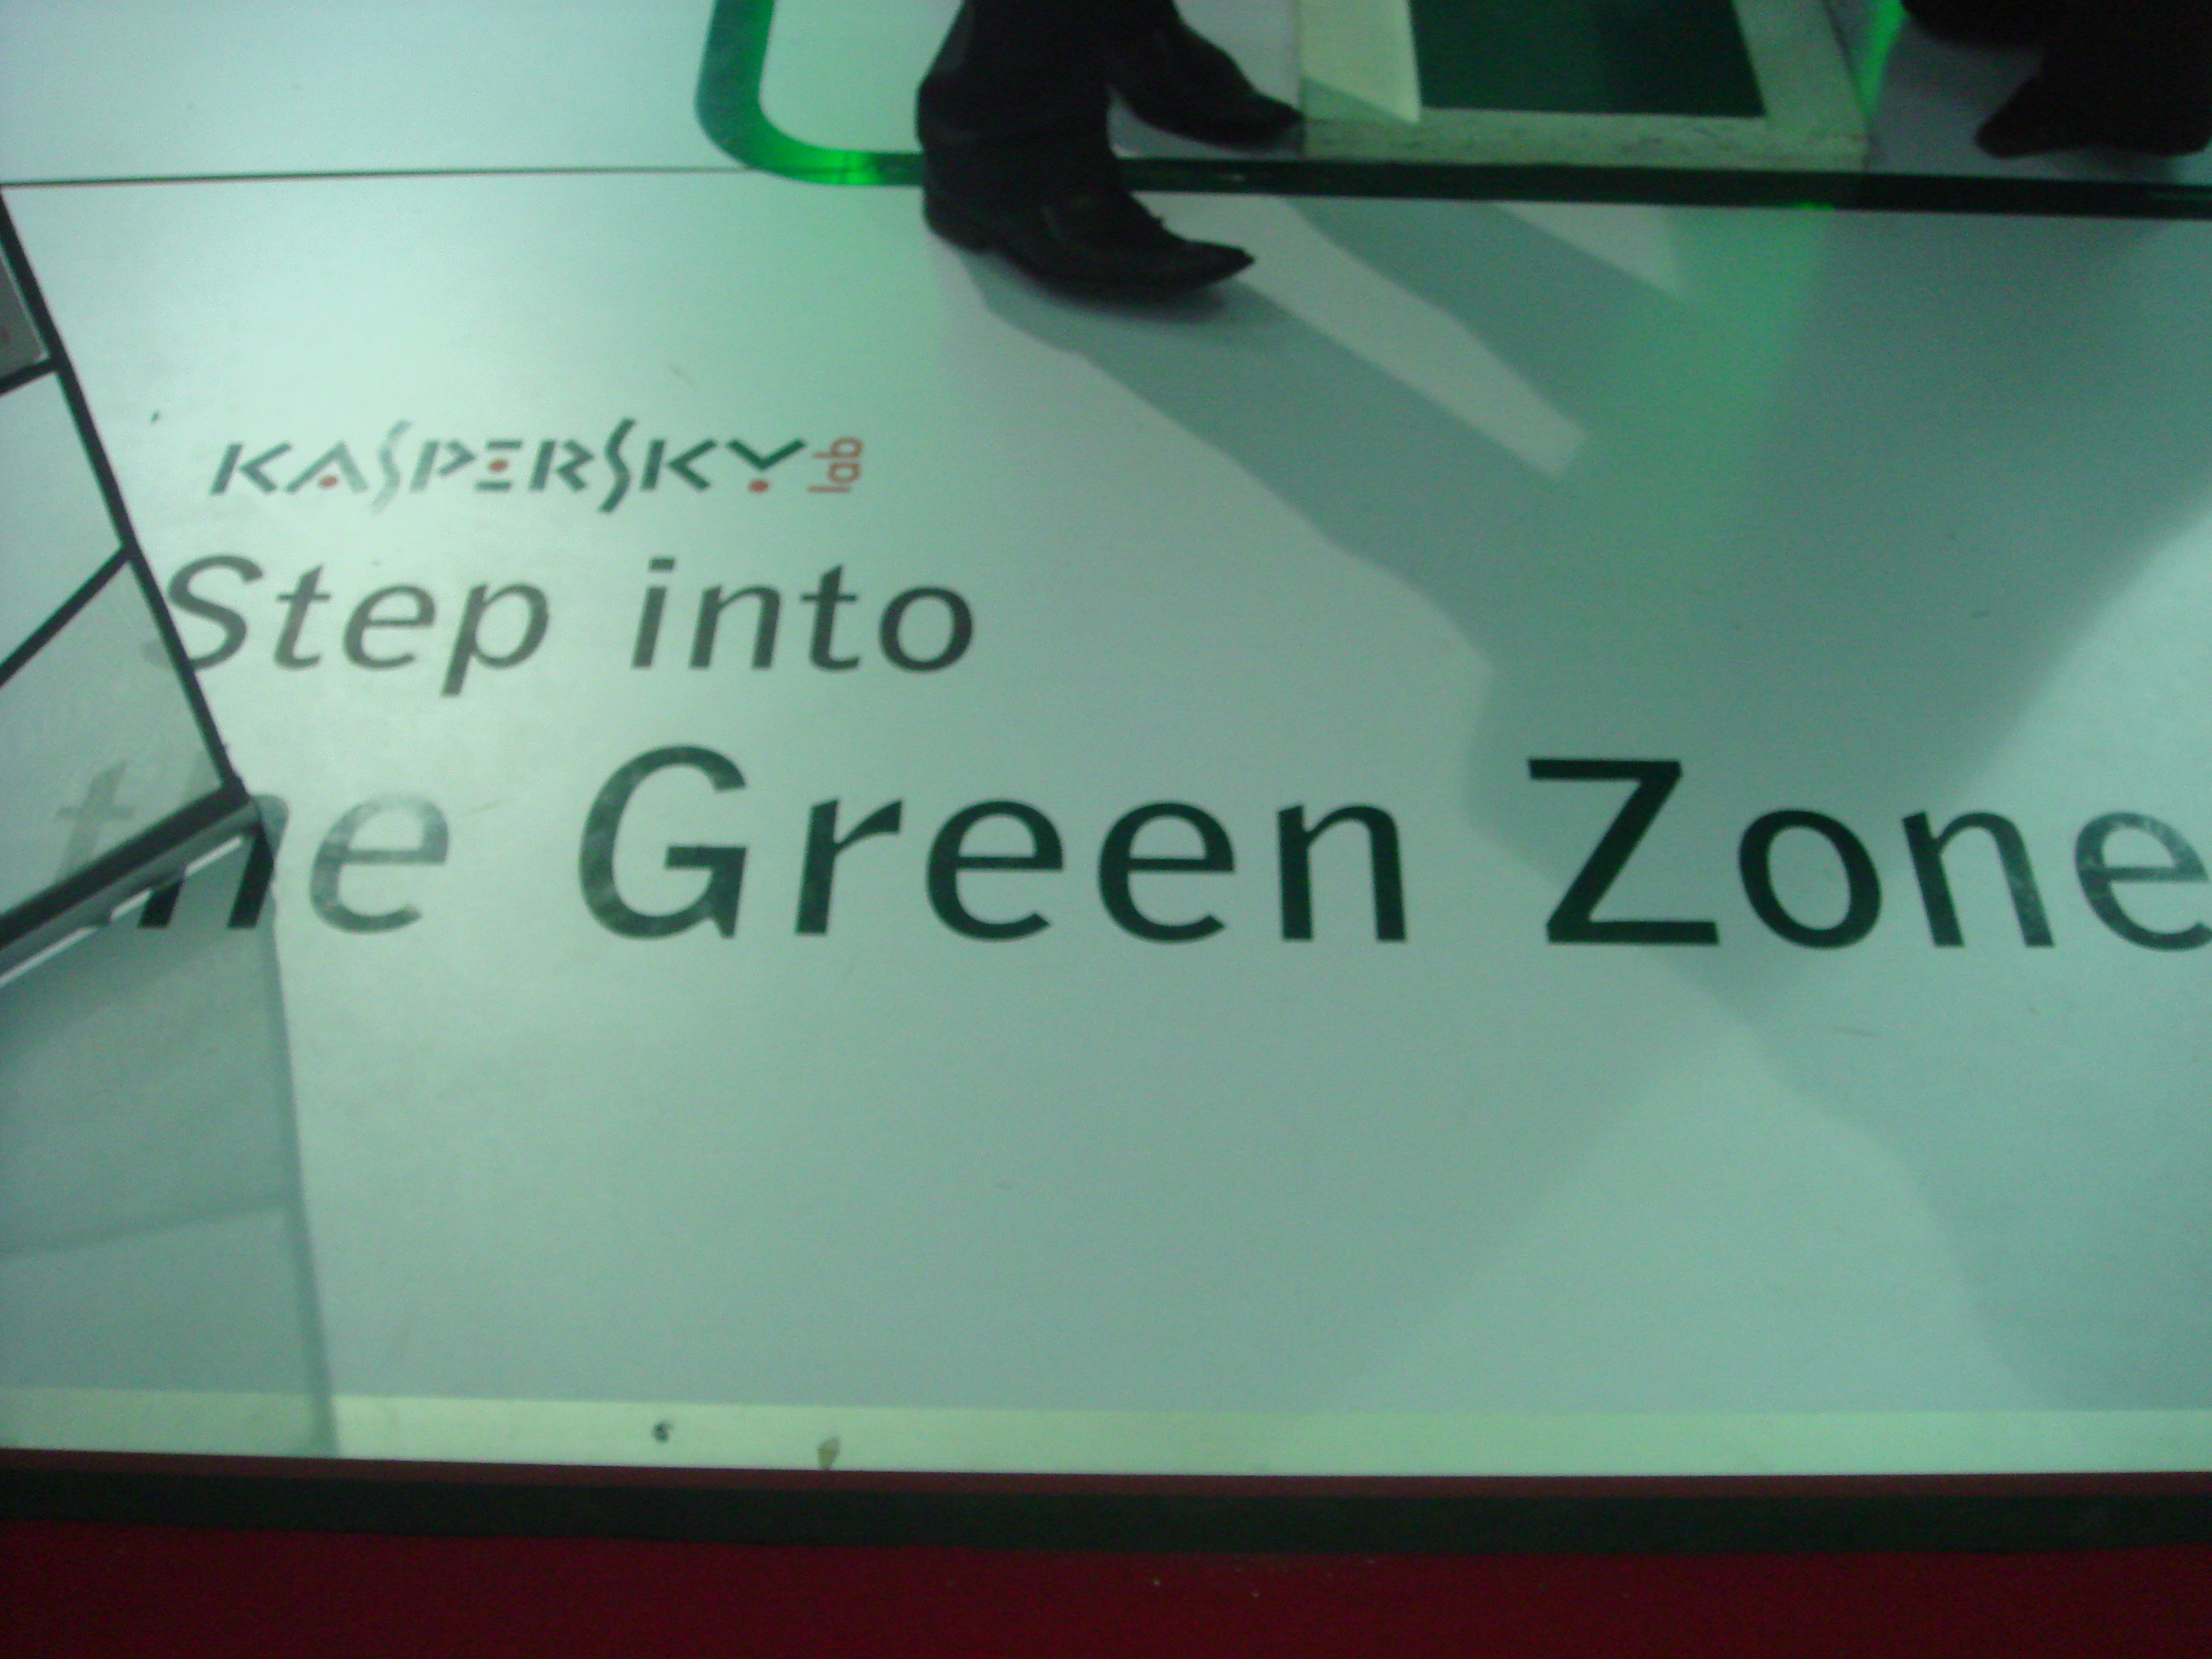 Kaspersky فى Cairo ICT 2010 "تقدم الى المنطقة الخضراء" 1